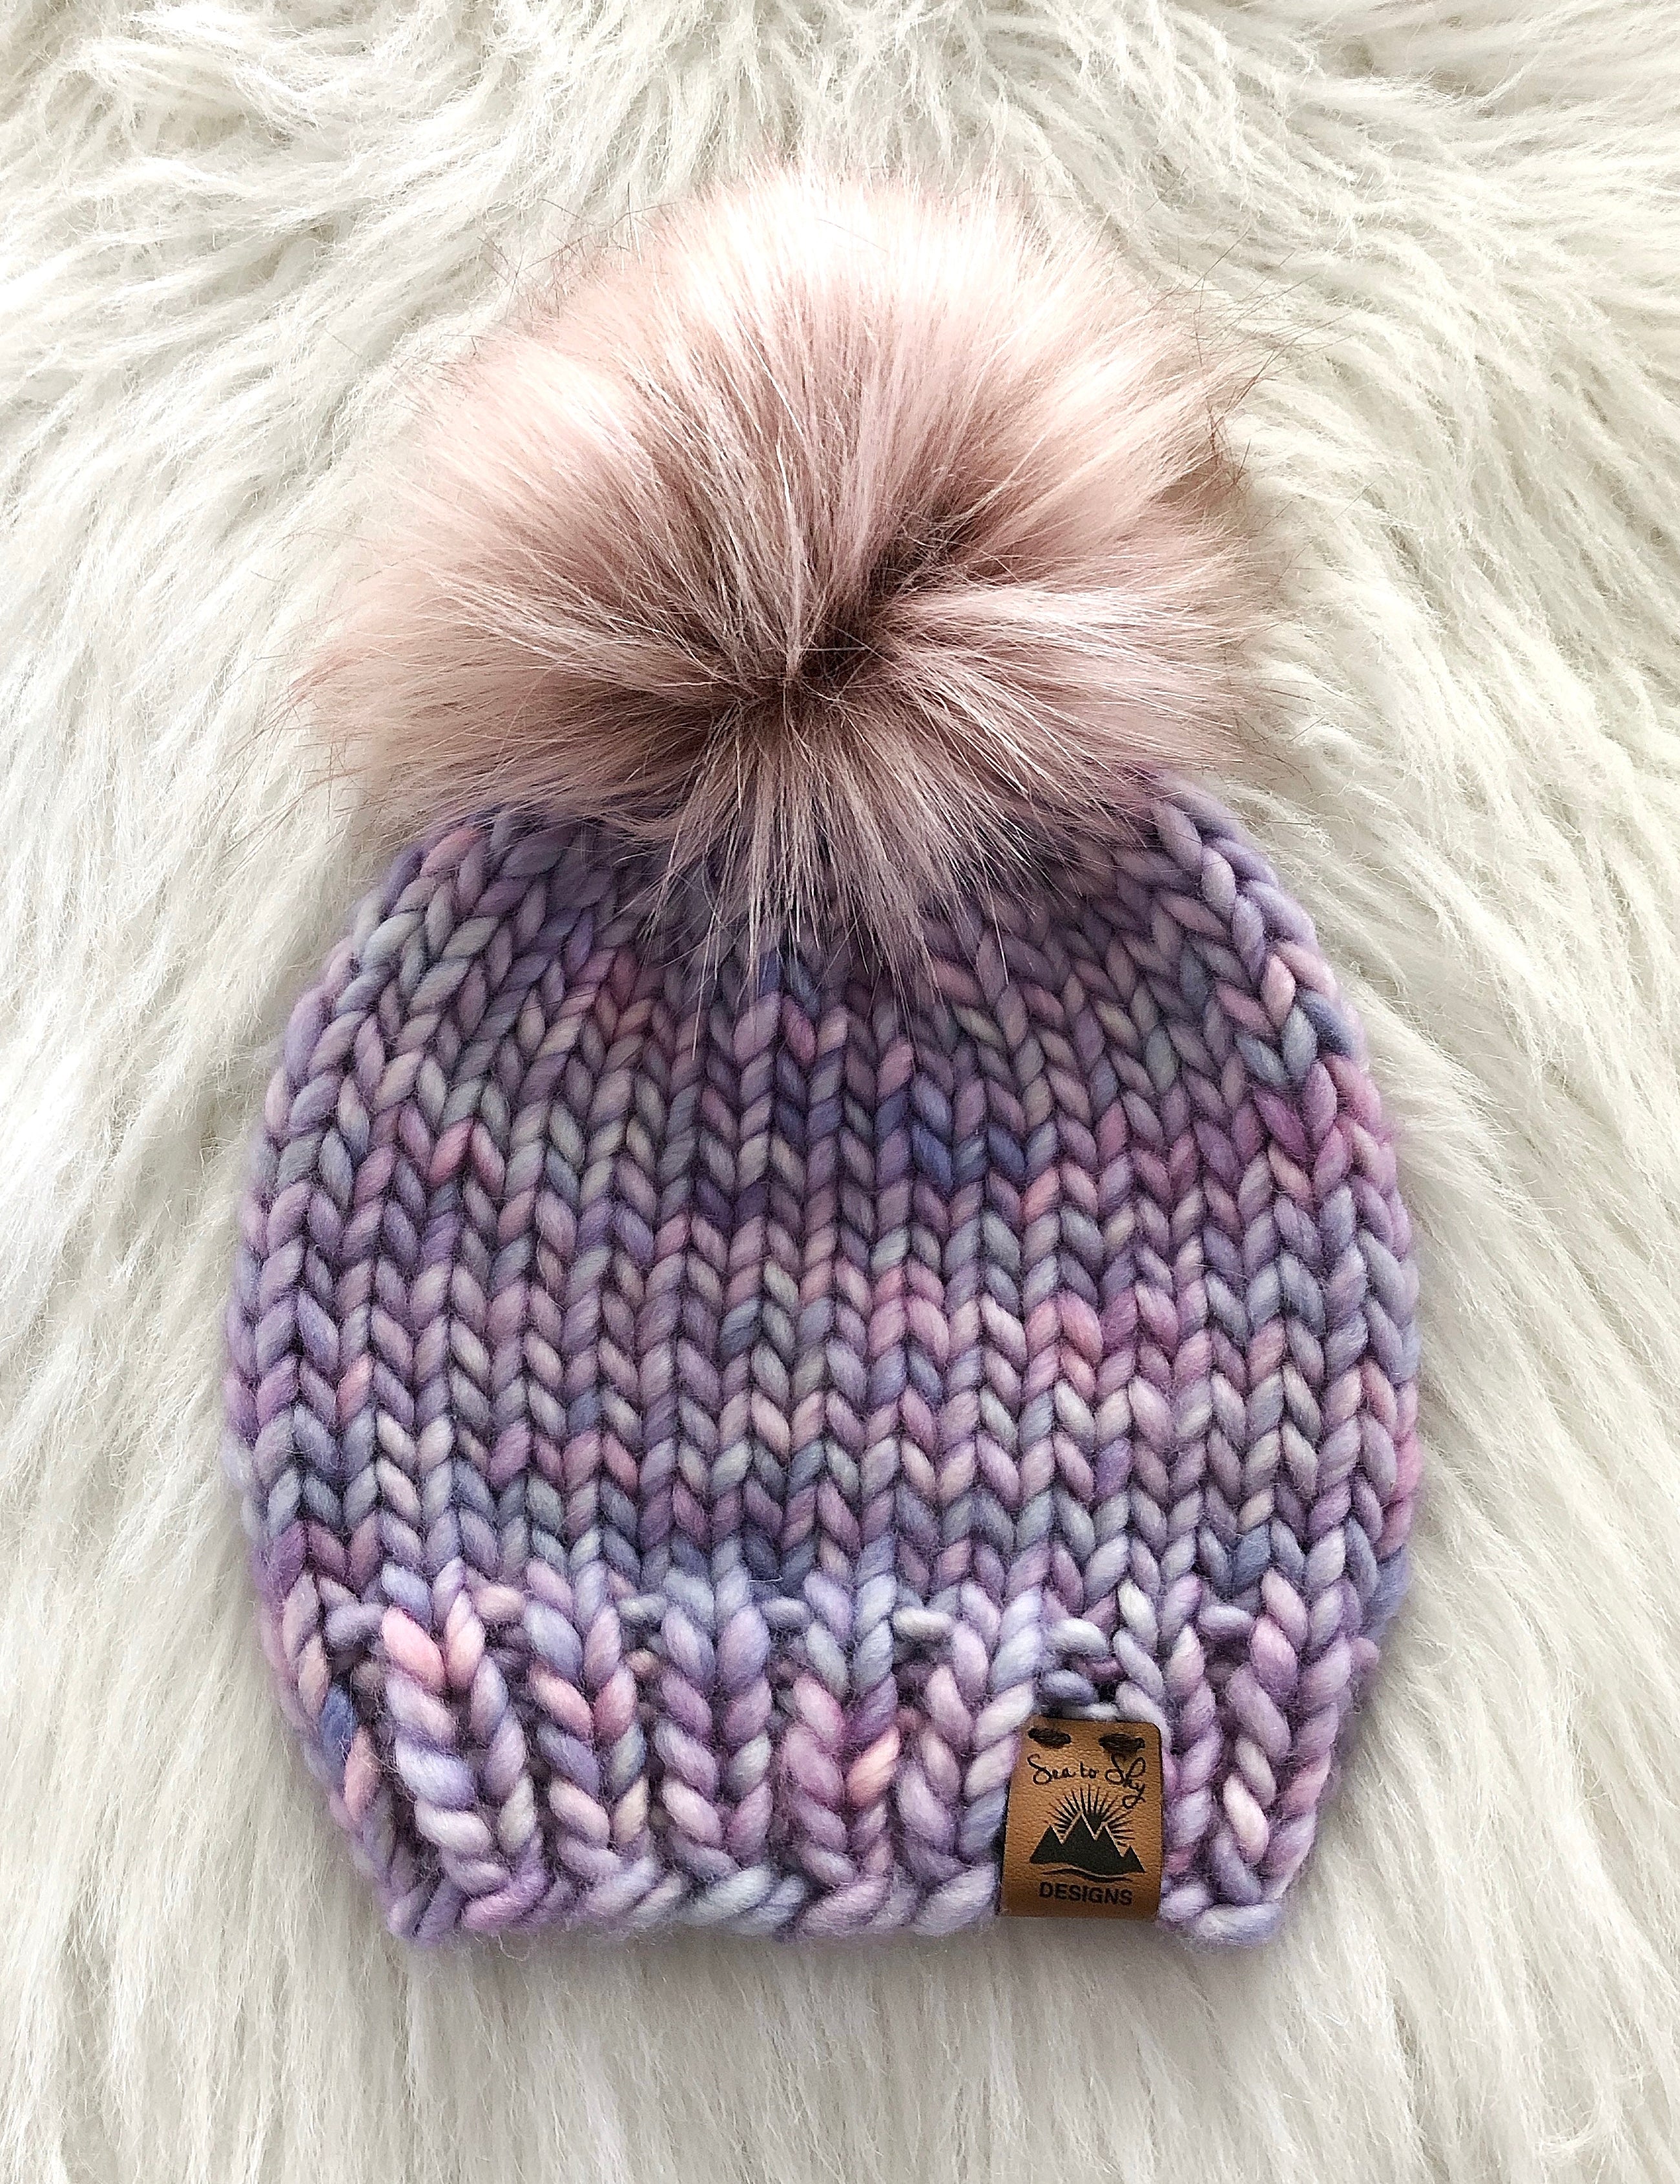 Ready to Ship - Toddler Size 100% Merino Wool Knit Hat